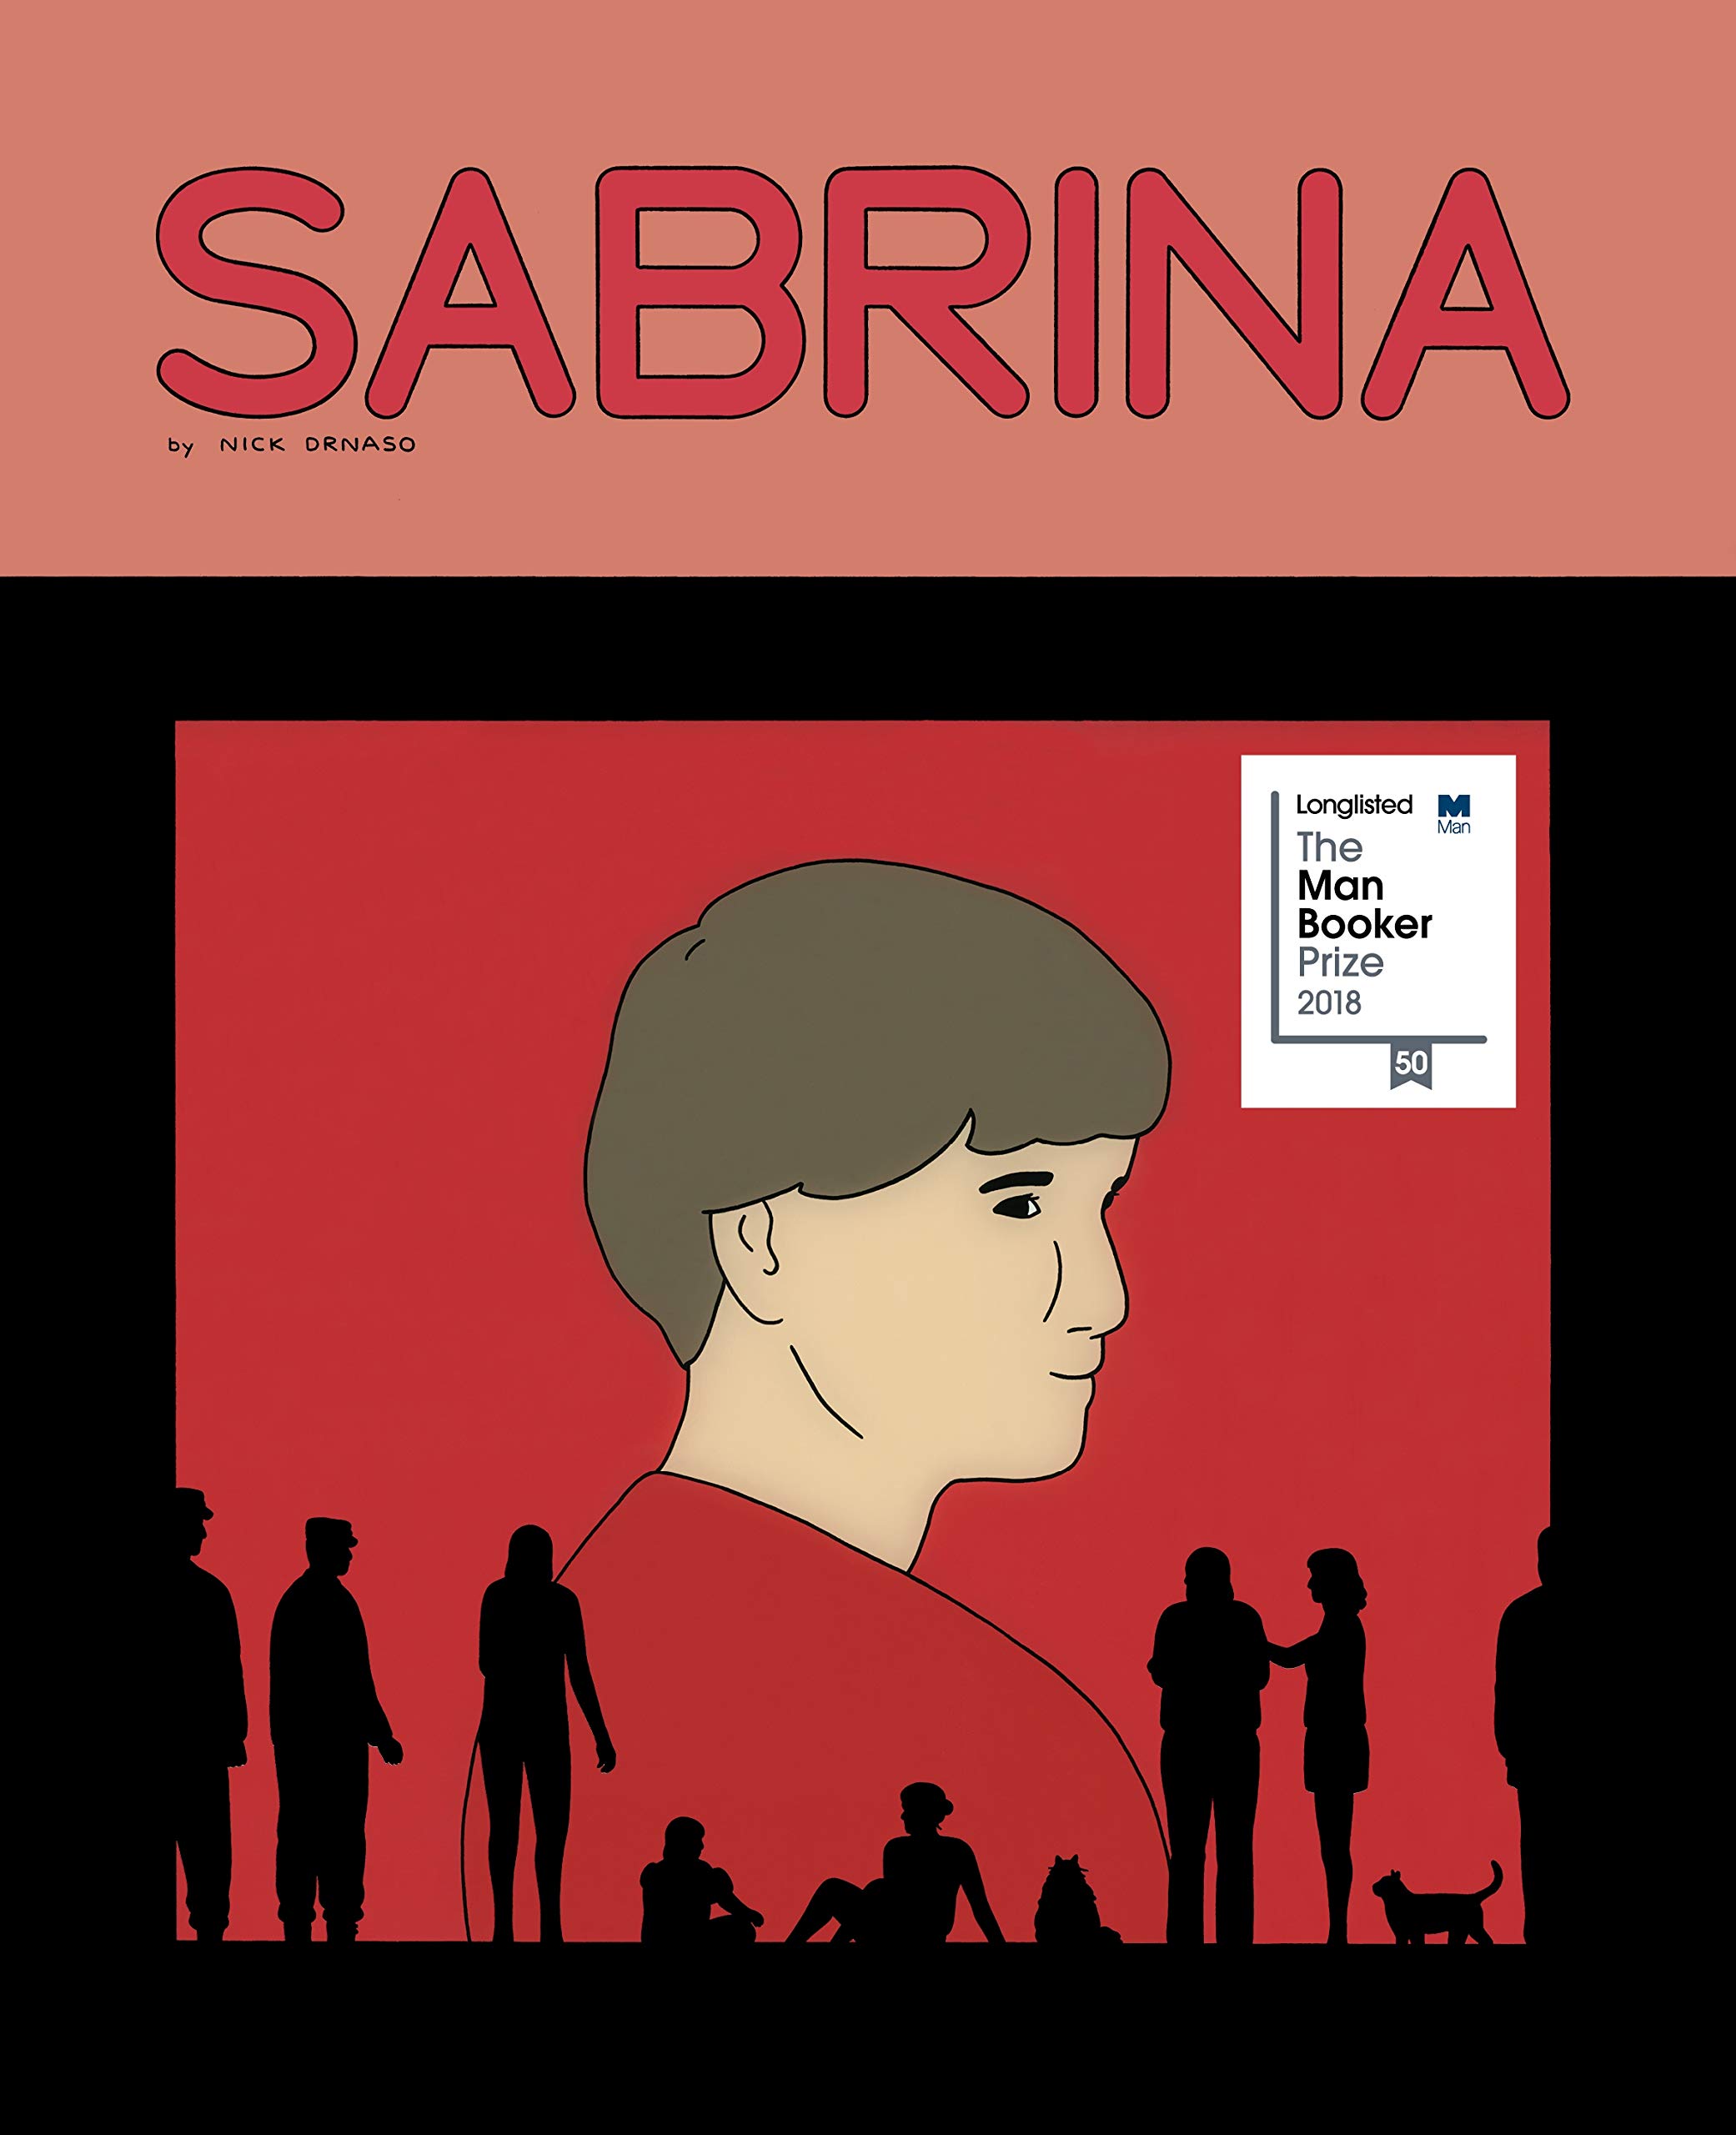 A book cover for Sabrina